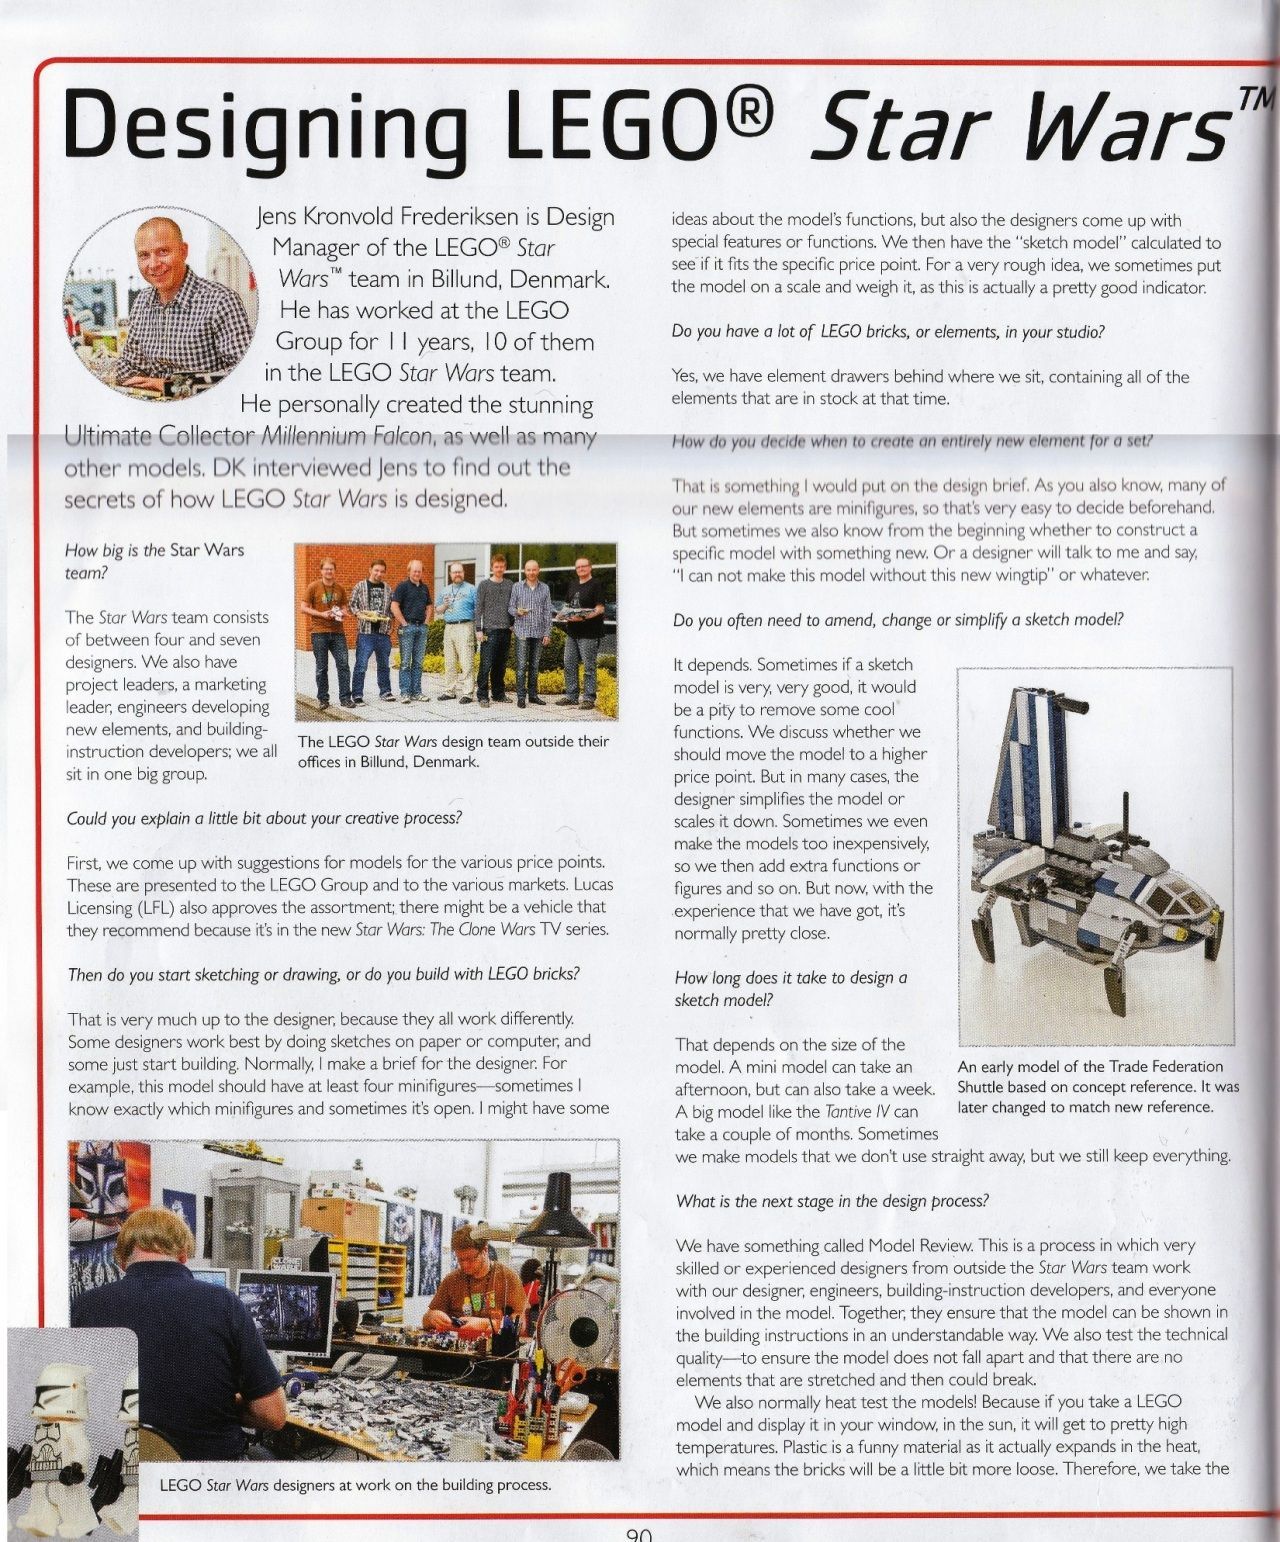 Lego Star Wars The Visual Dictionary 2009 Lego Star Wars The Visual Dictionary 2009 91